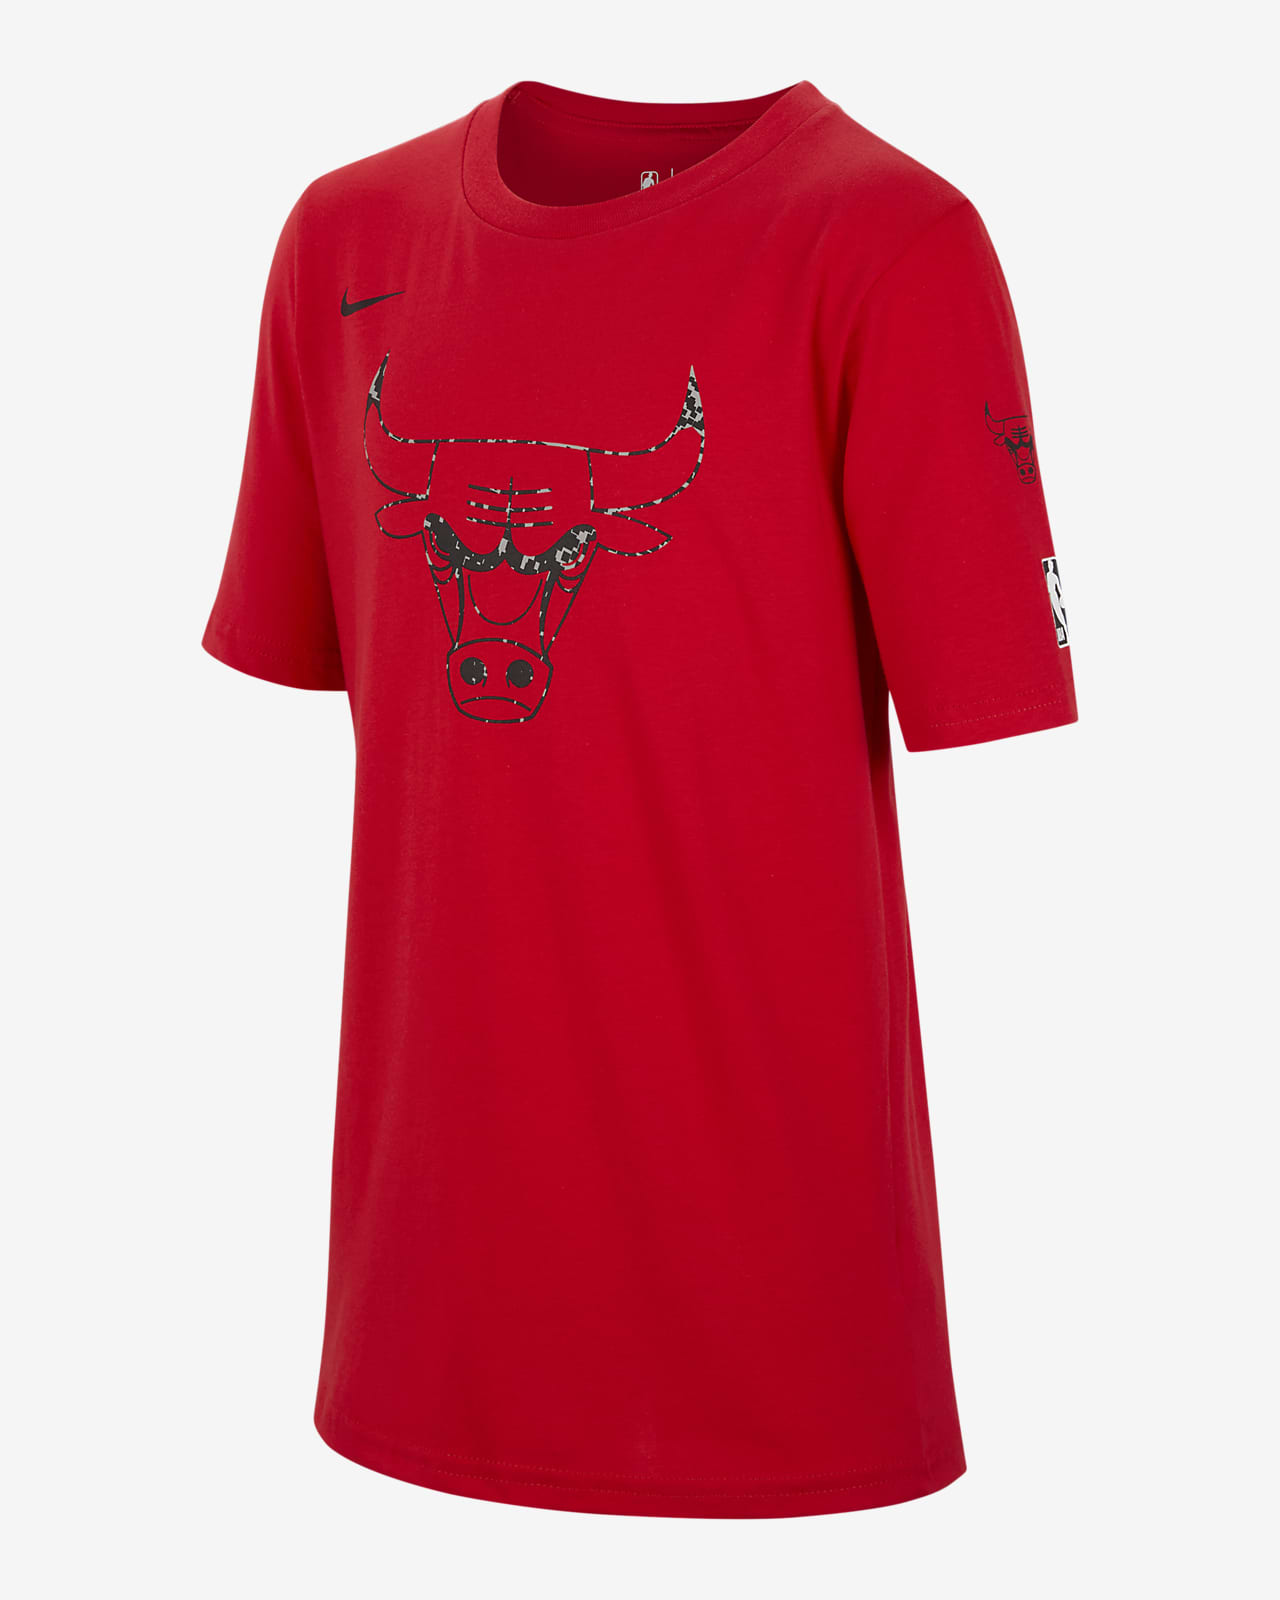 Chicago Bulls Essential Older Kids' (Boys') Nike NBA T-Shirt